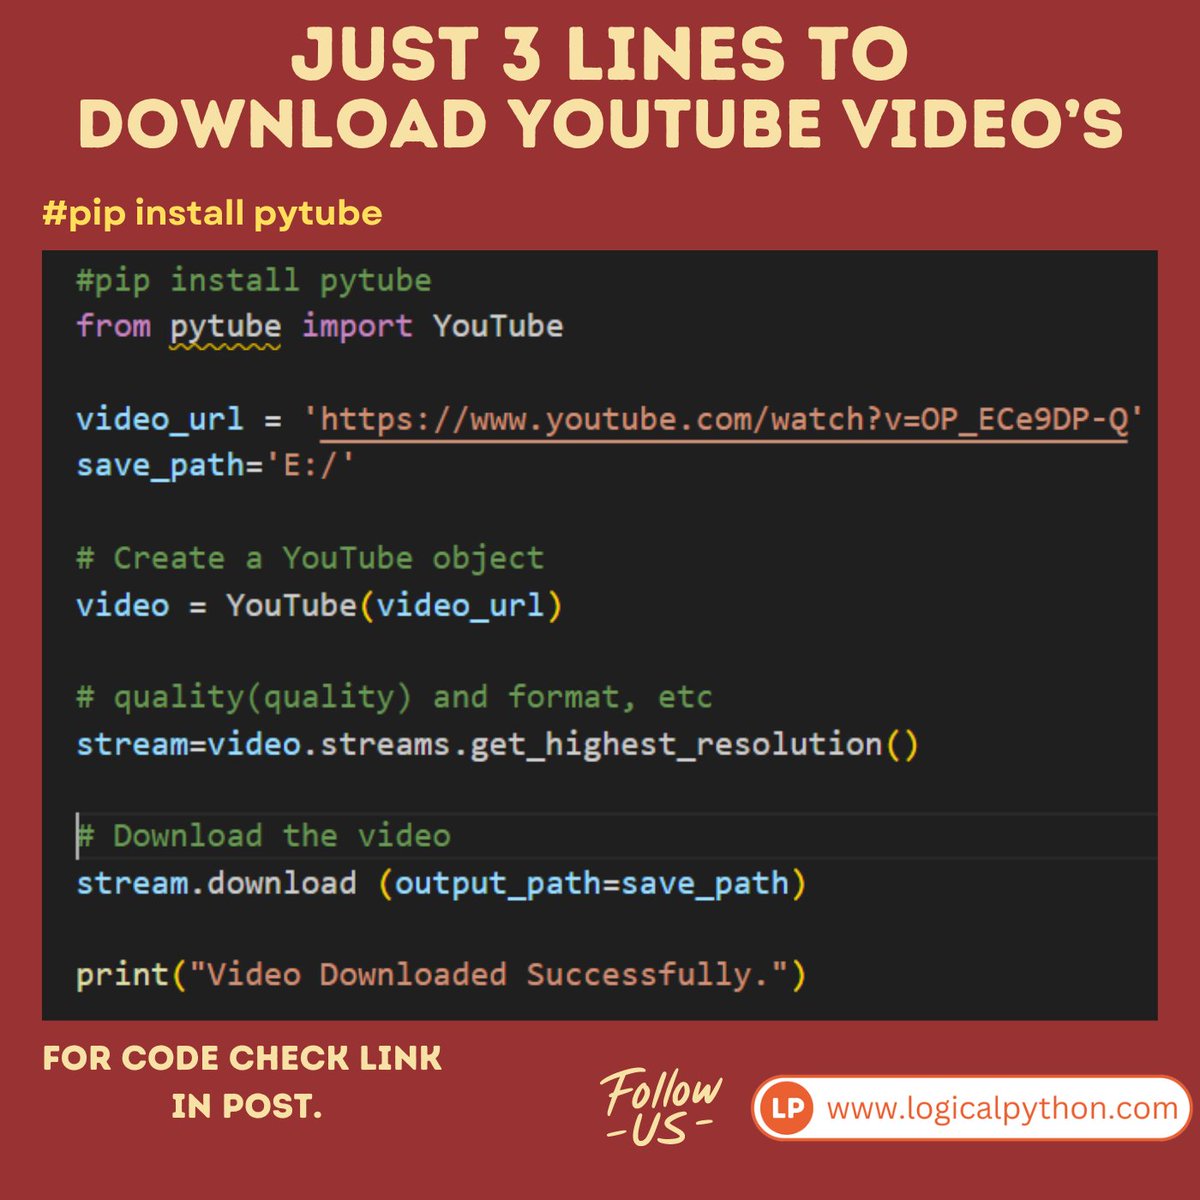 Youtube Video Downloader in Python.

Source Code: t.me/logicalpython

#Python #Programming #Coding #pythonprogramming #100DaysofCode